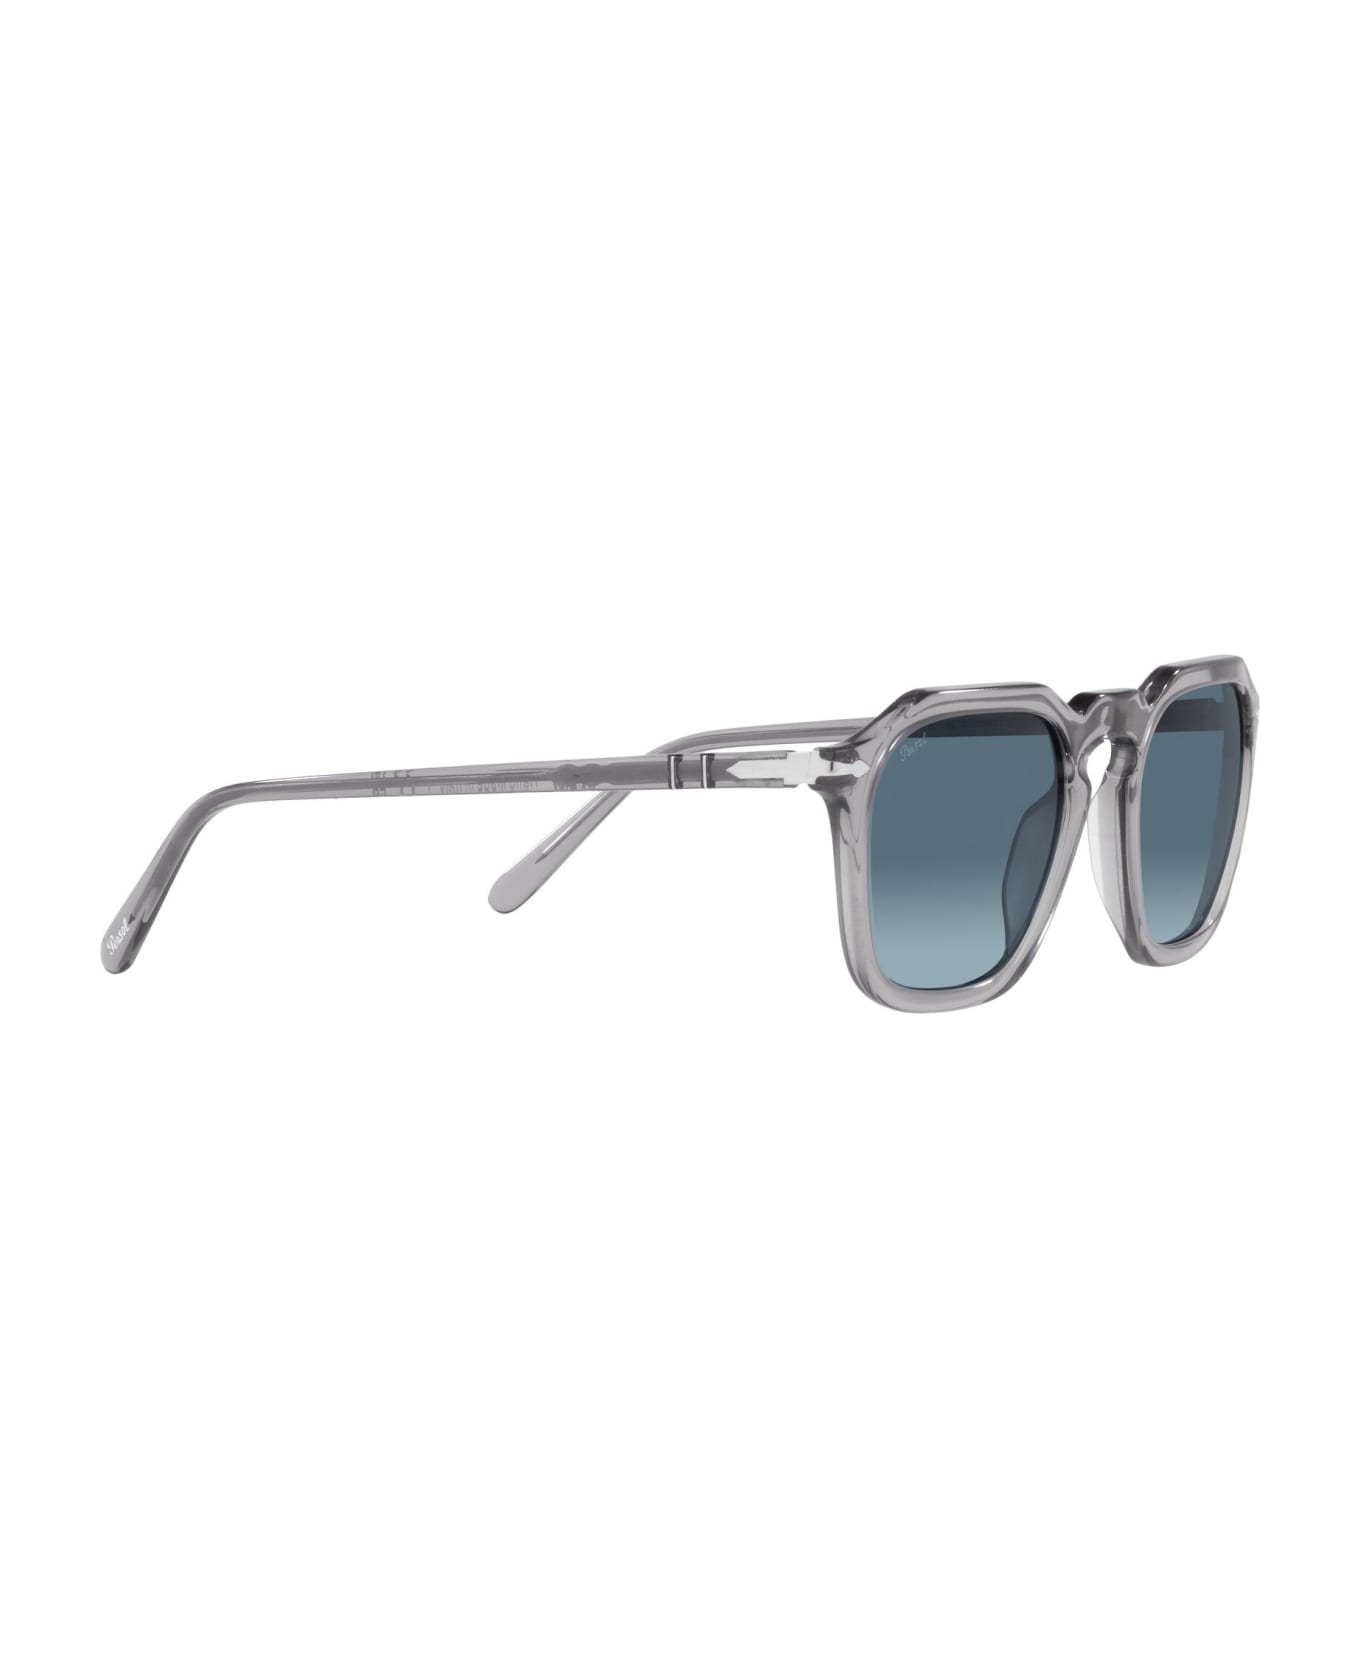 Persol Sunglasses - Grigio/Blu sfumato サングラス